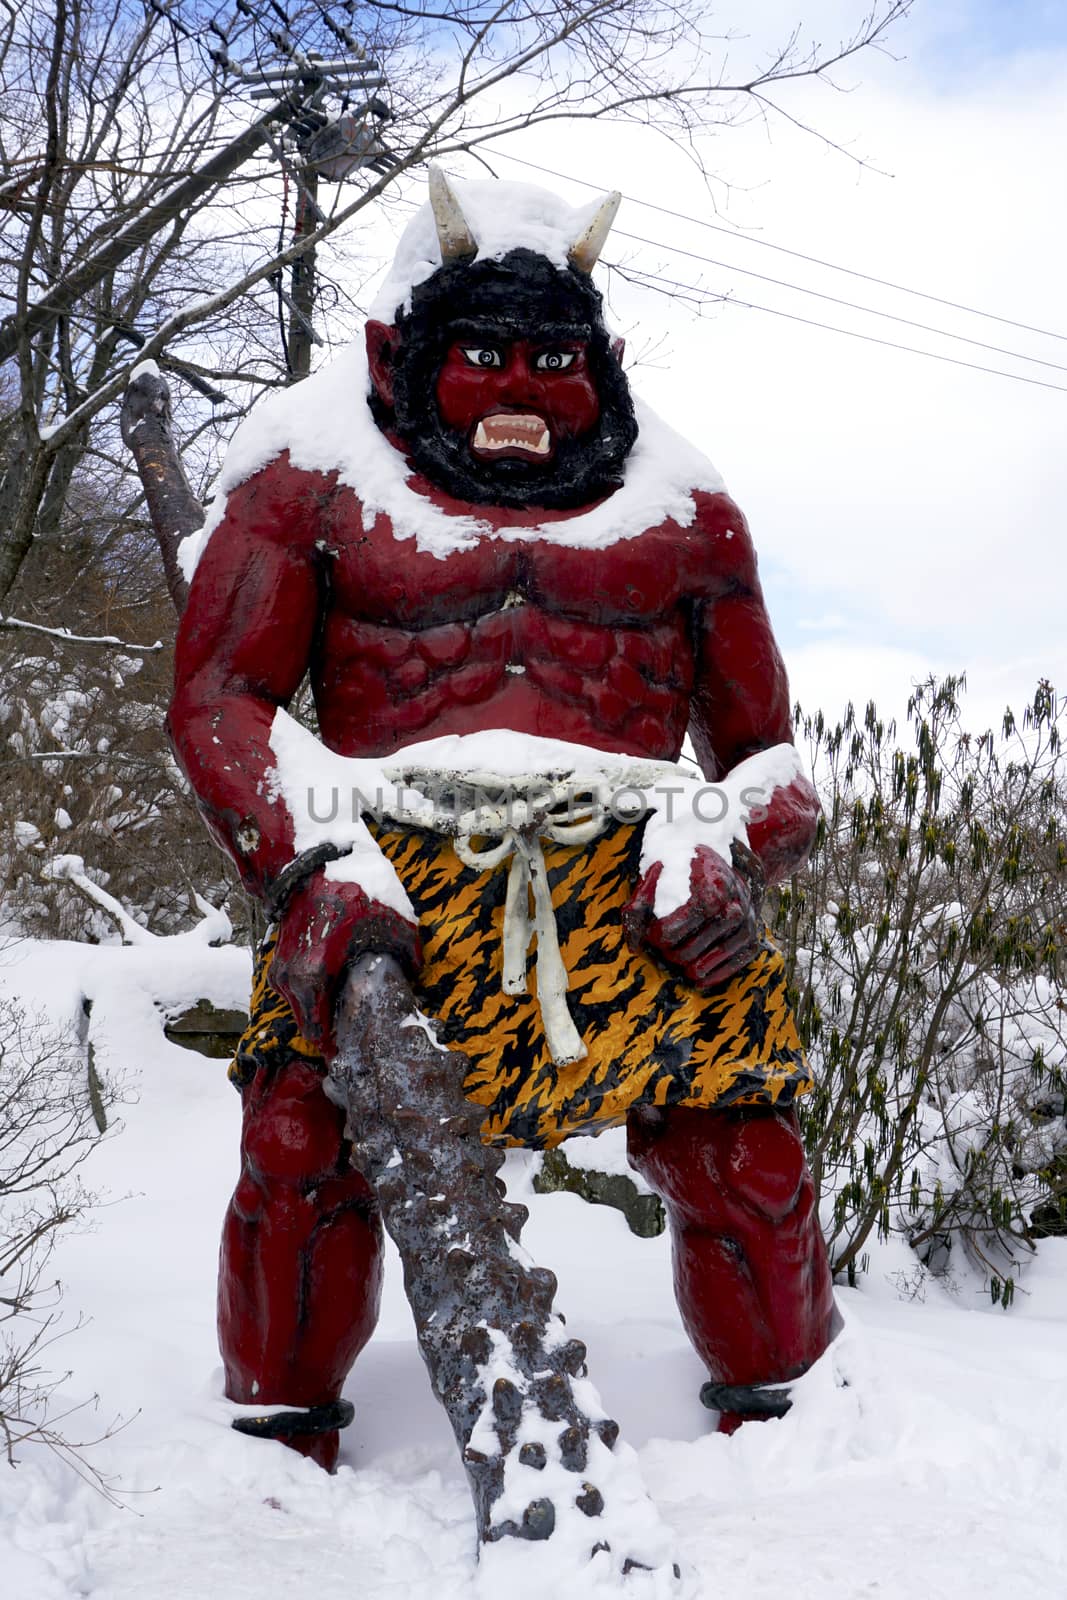 Red giant myth sculpture at Noboribetsu onsen snow winter national park in Jigokudani, Hokkaido, Japan